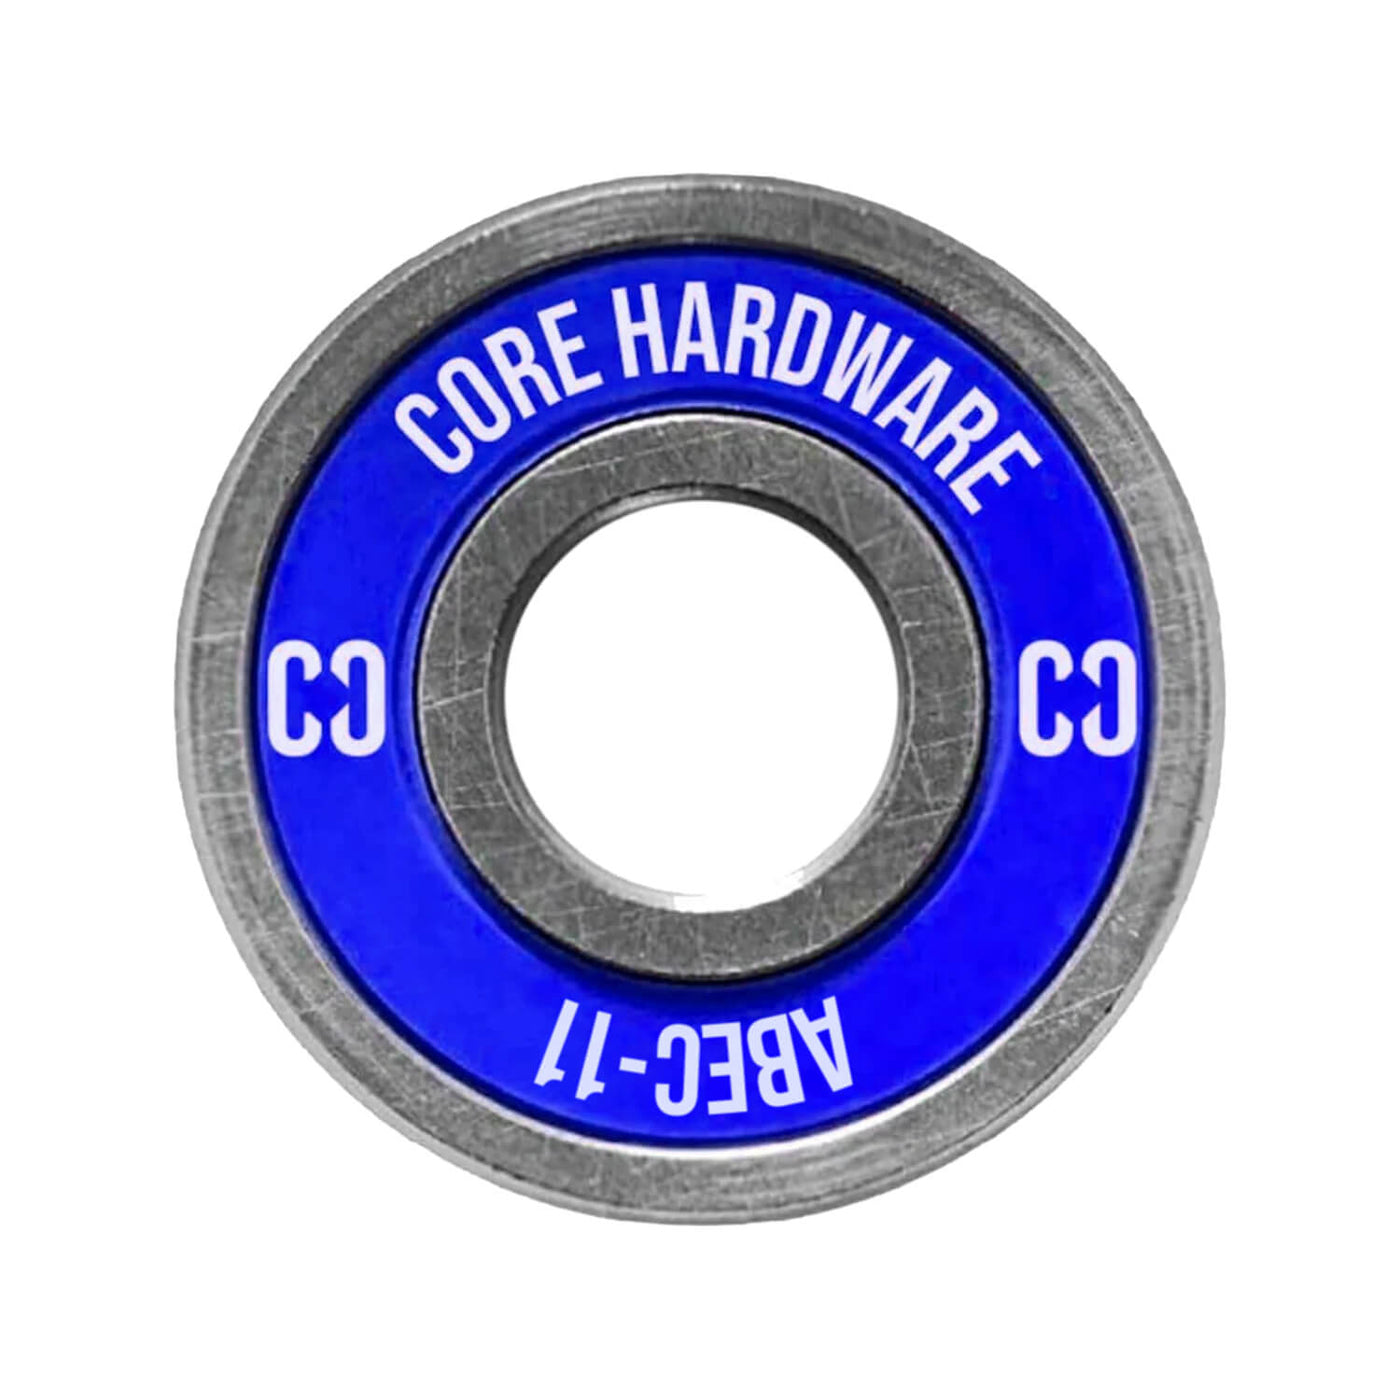 CORE Hardware ABEC 11 Skate Bearings - Pack of 8